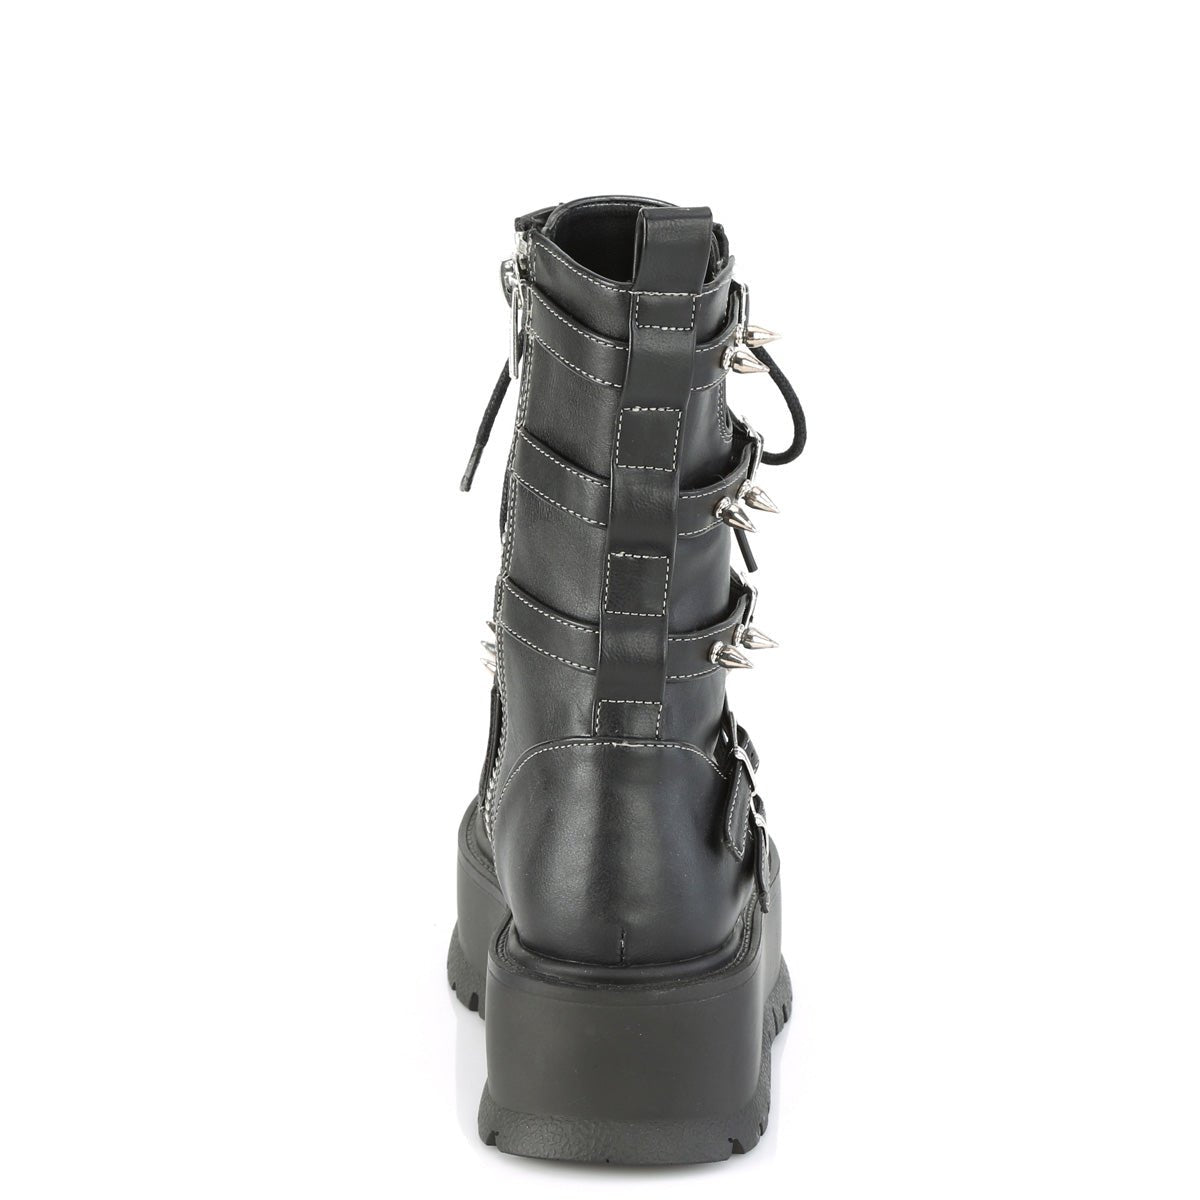 Too Fast | Demonia Slacker 165 | Black Vegan Leather Women's Mid Calf Boots